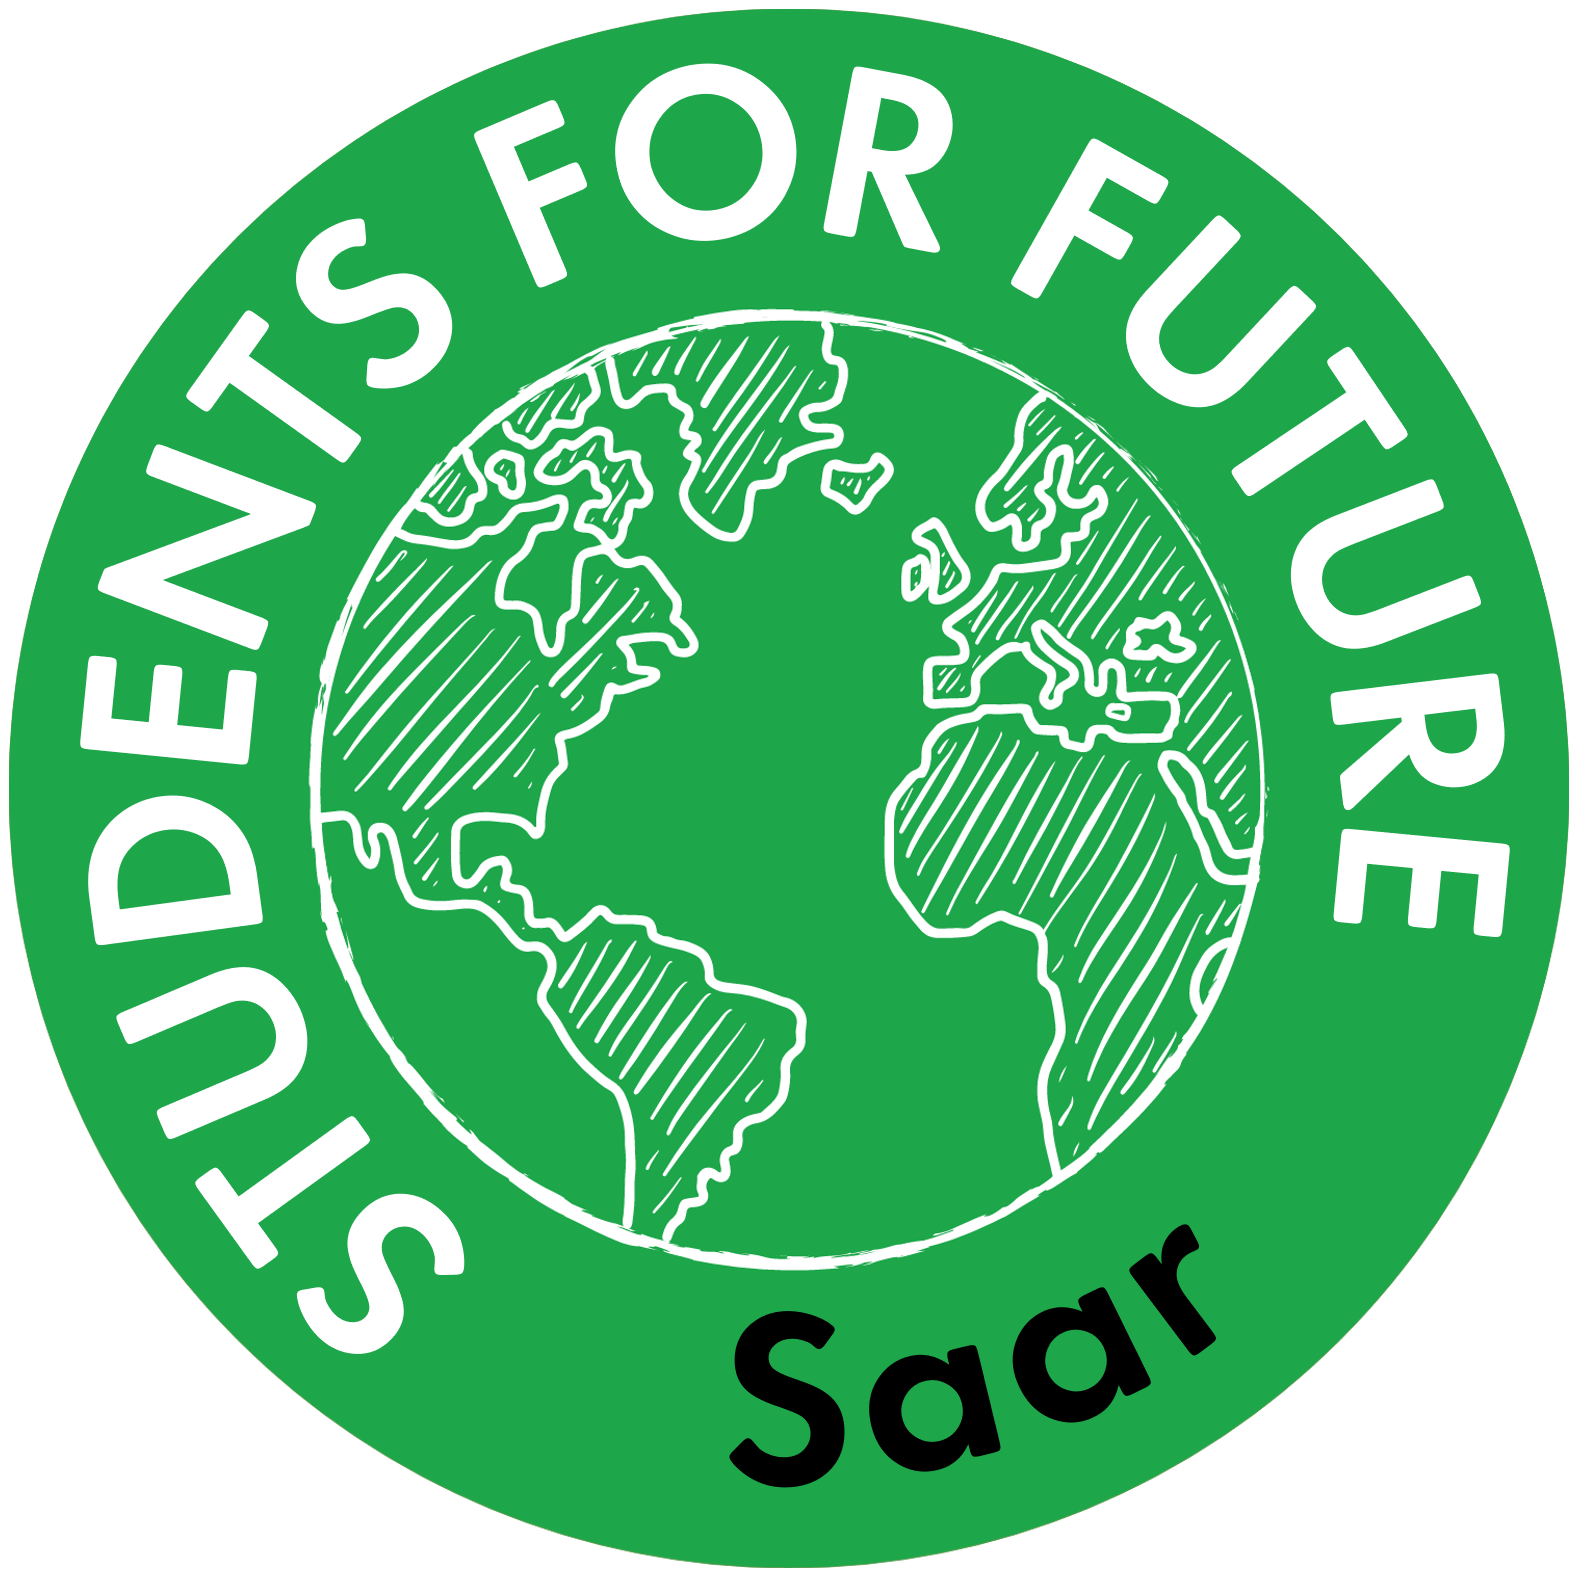 Students for Future Saar